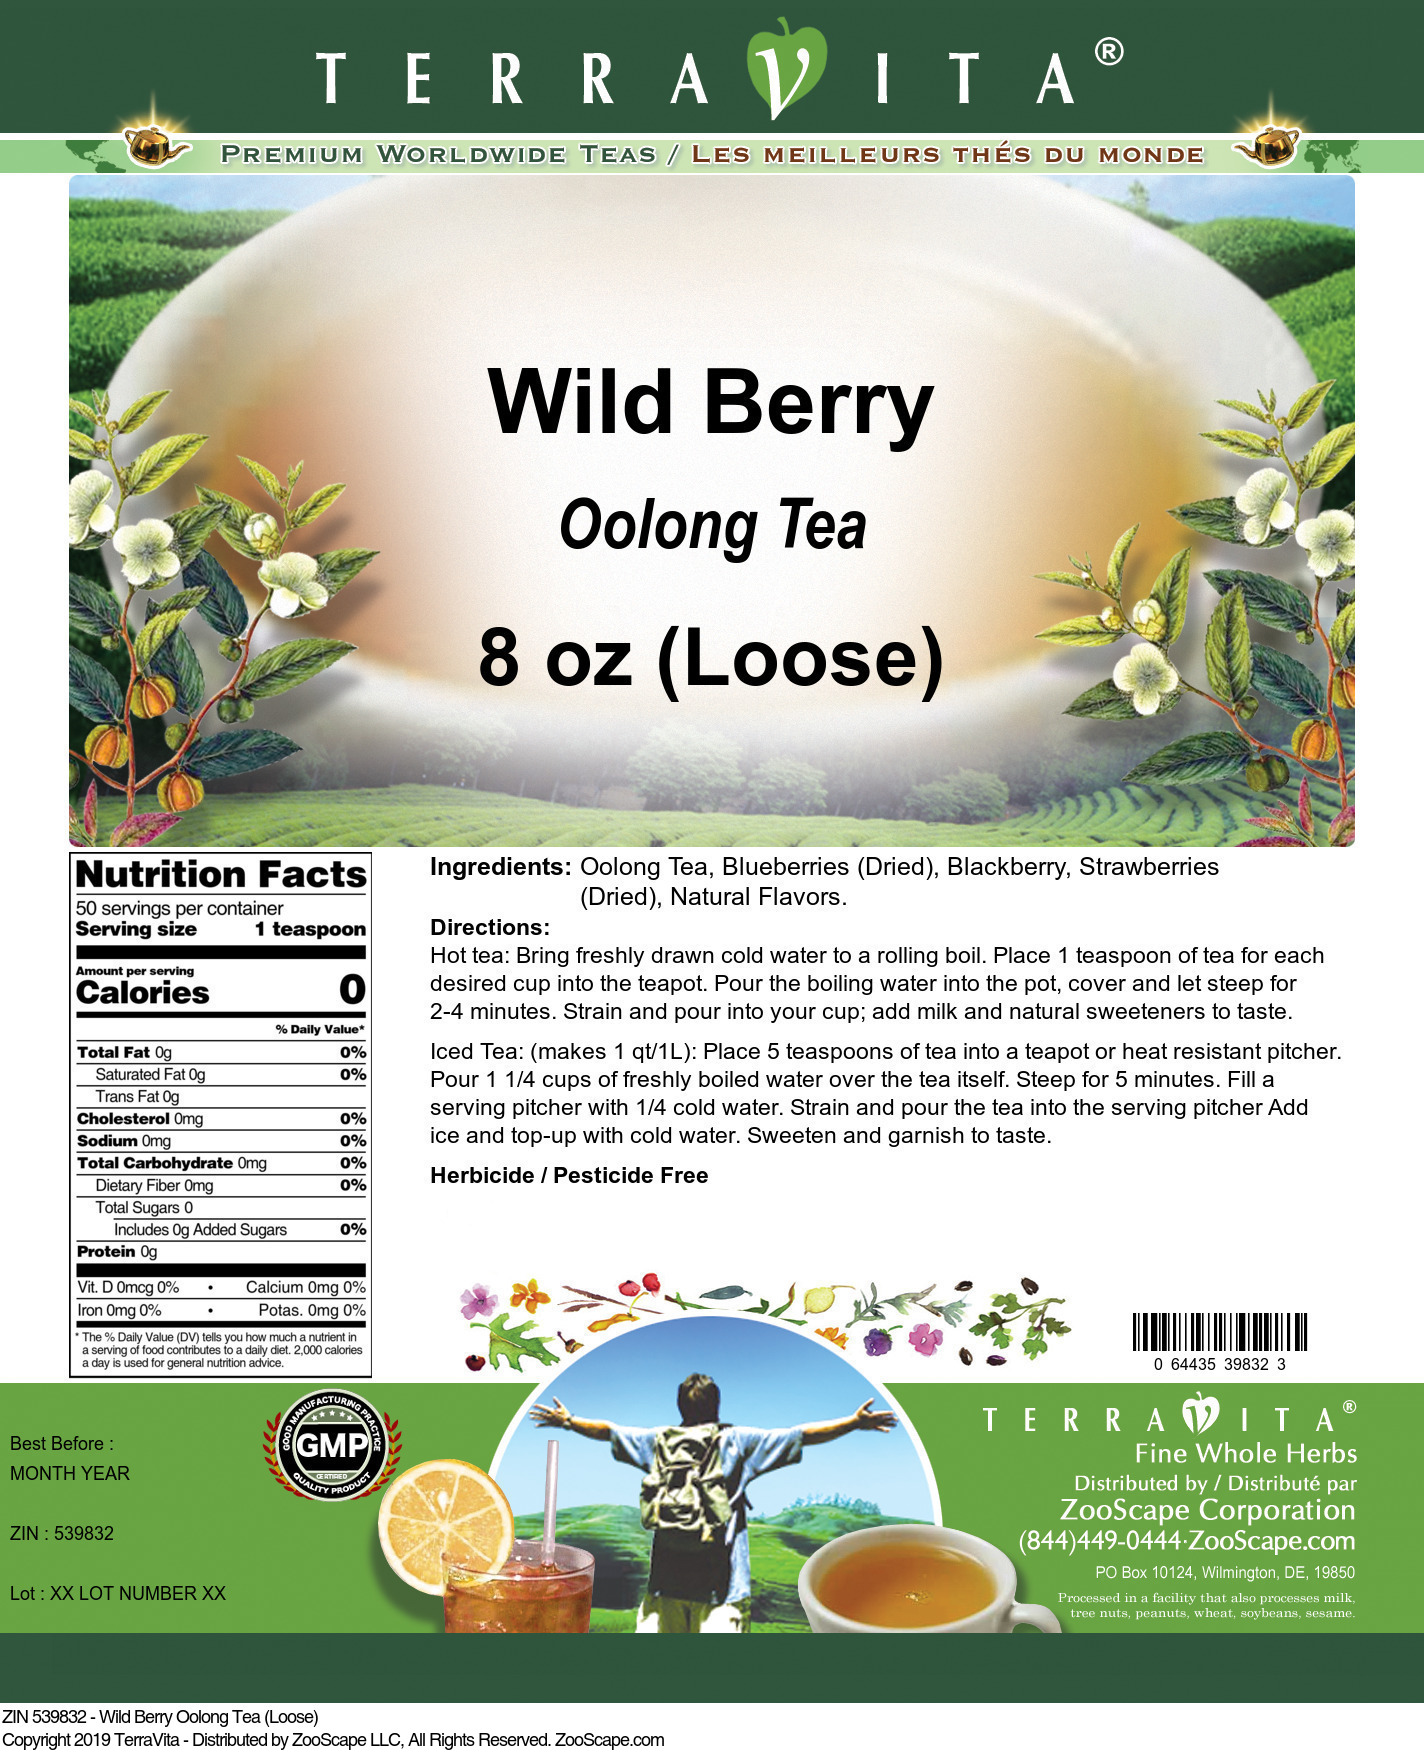 Wild Berry Oolong Tea (Loose) - Label